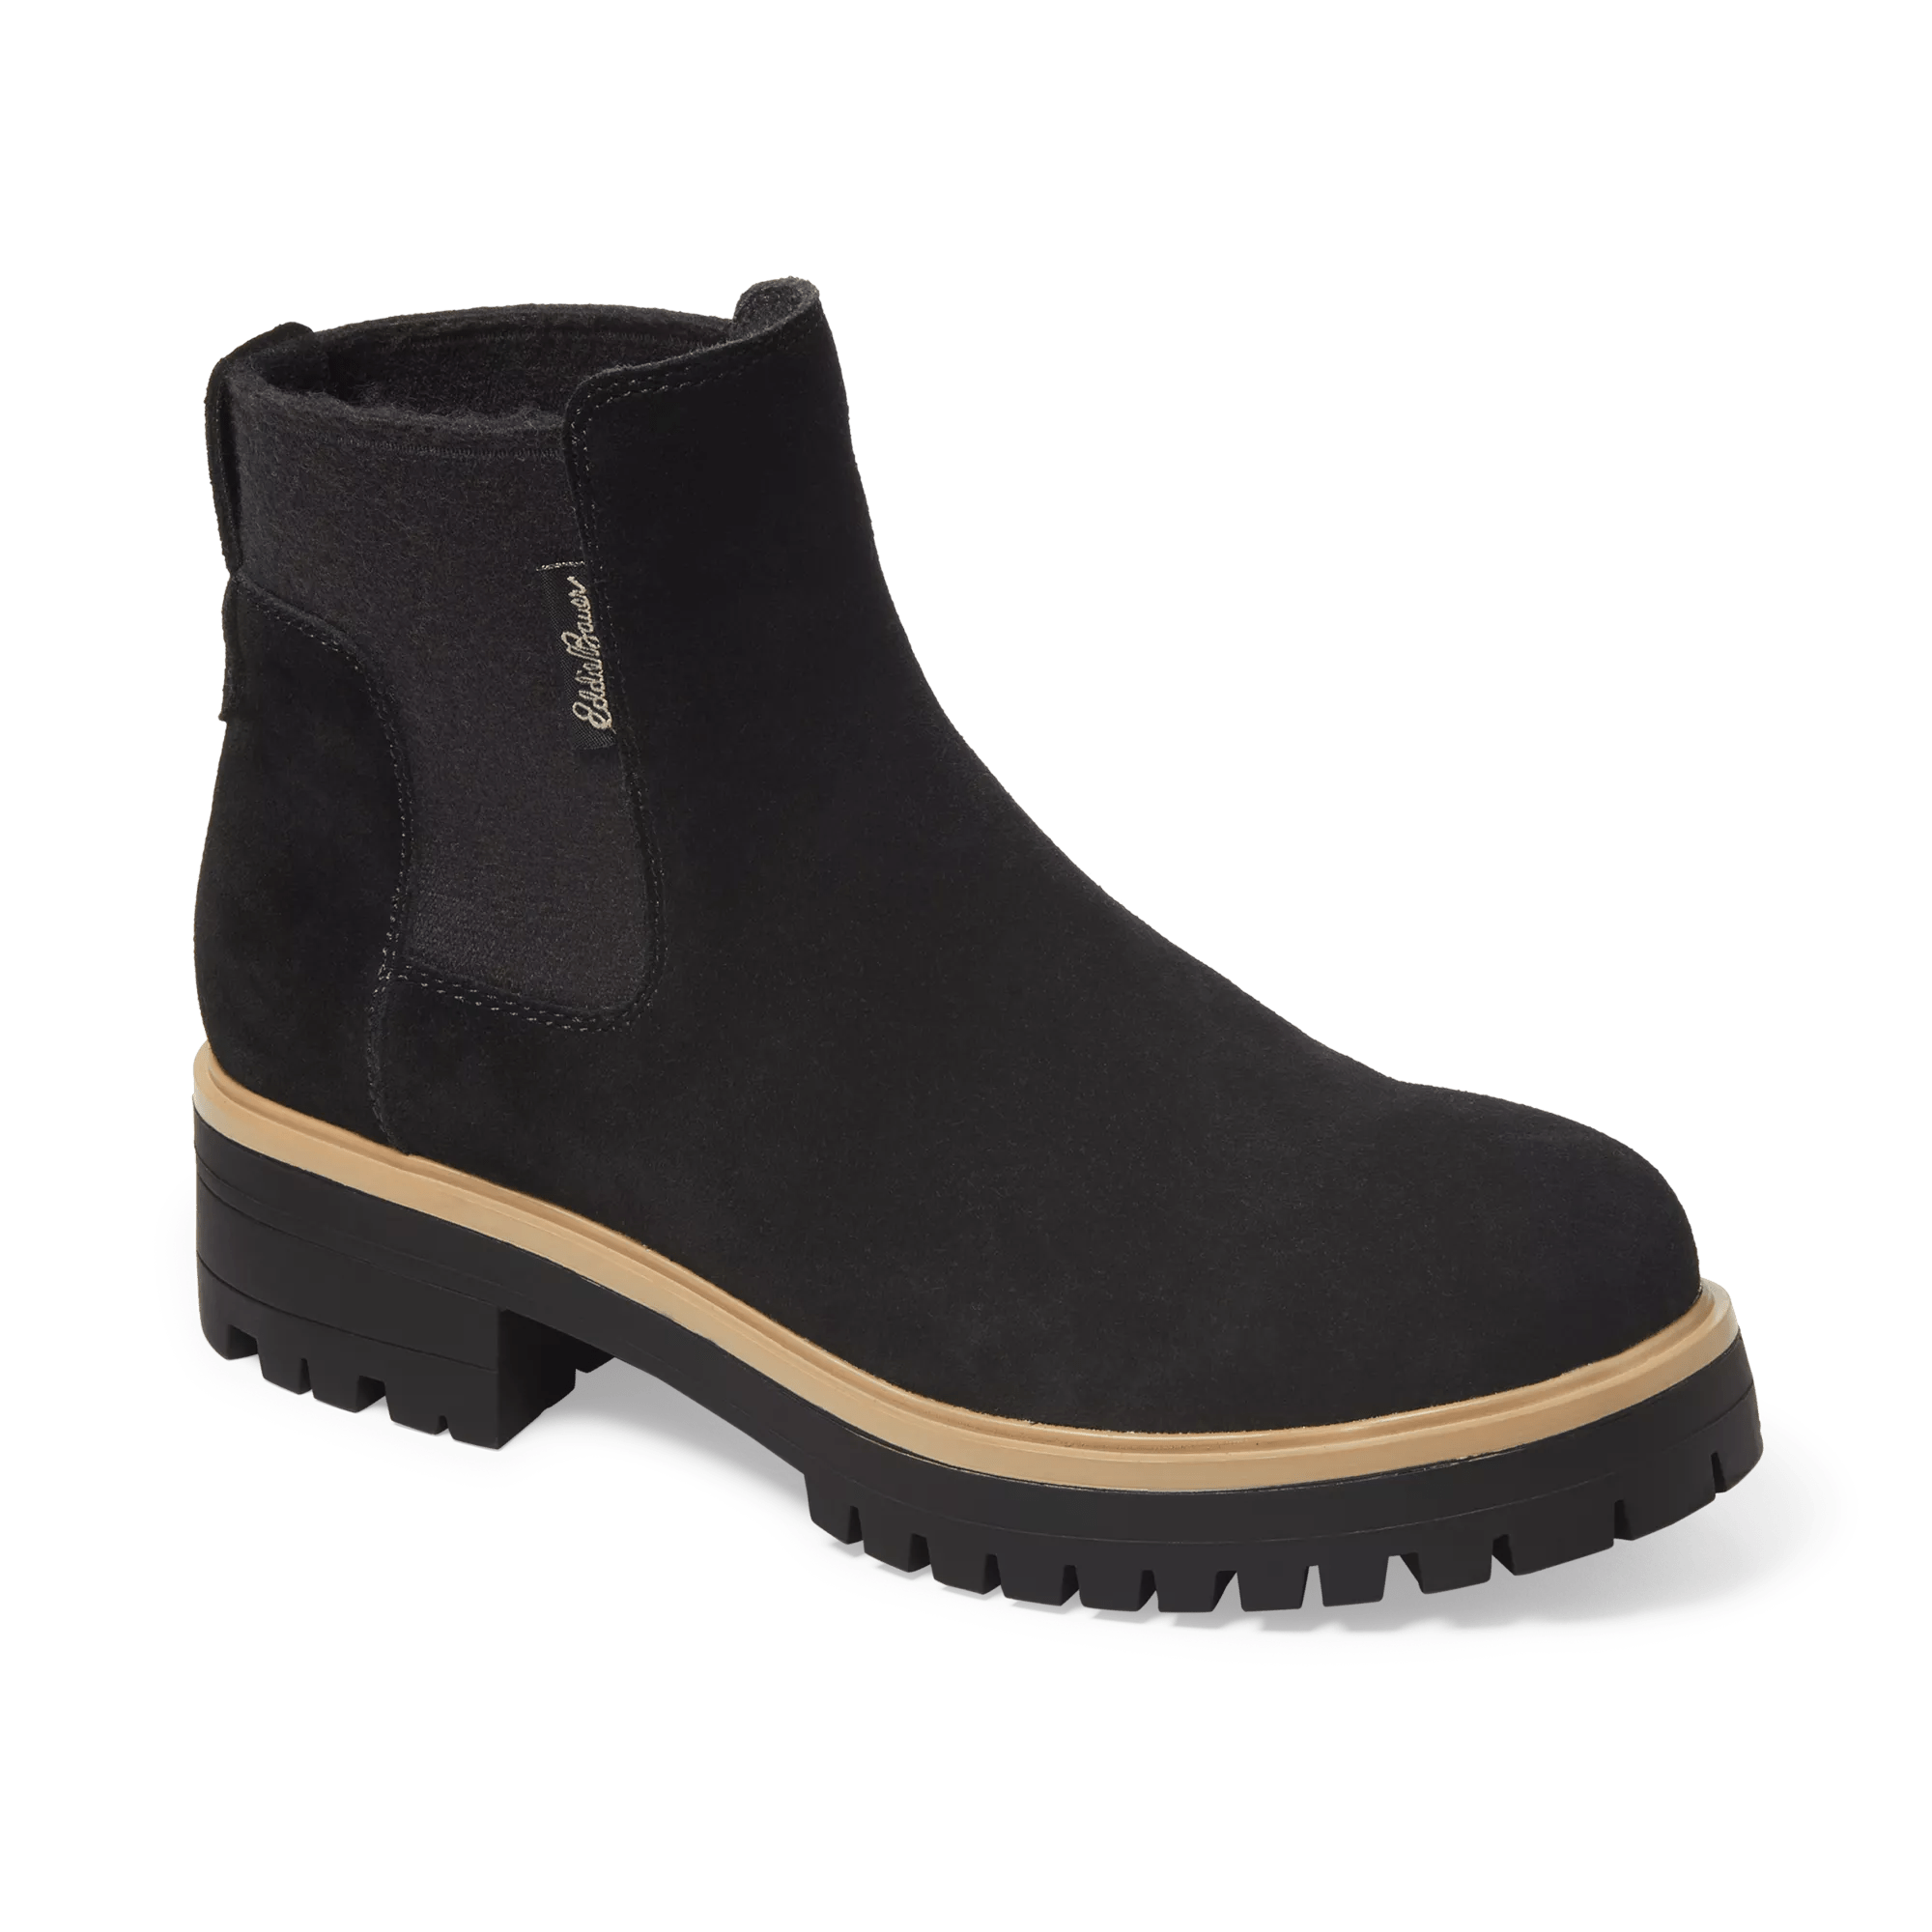 Bellingham Chelsea Boots